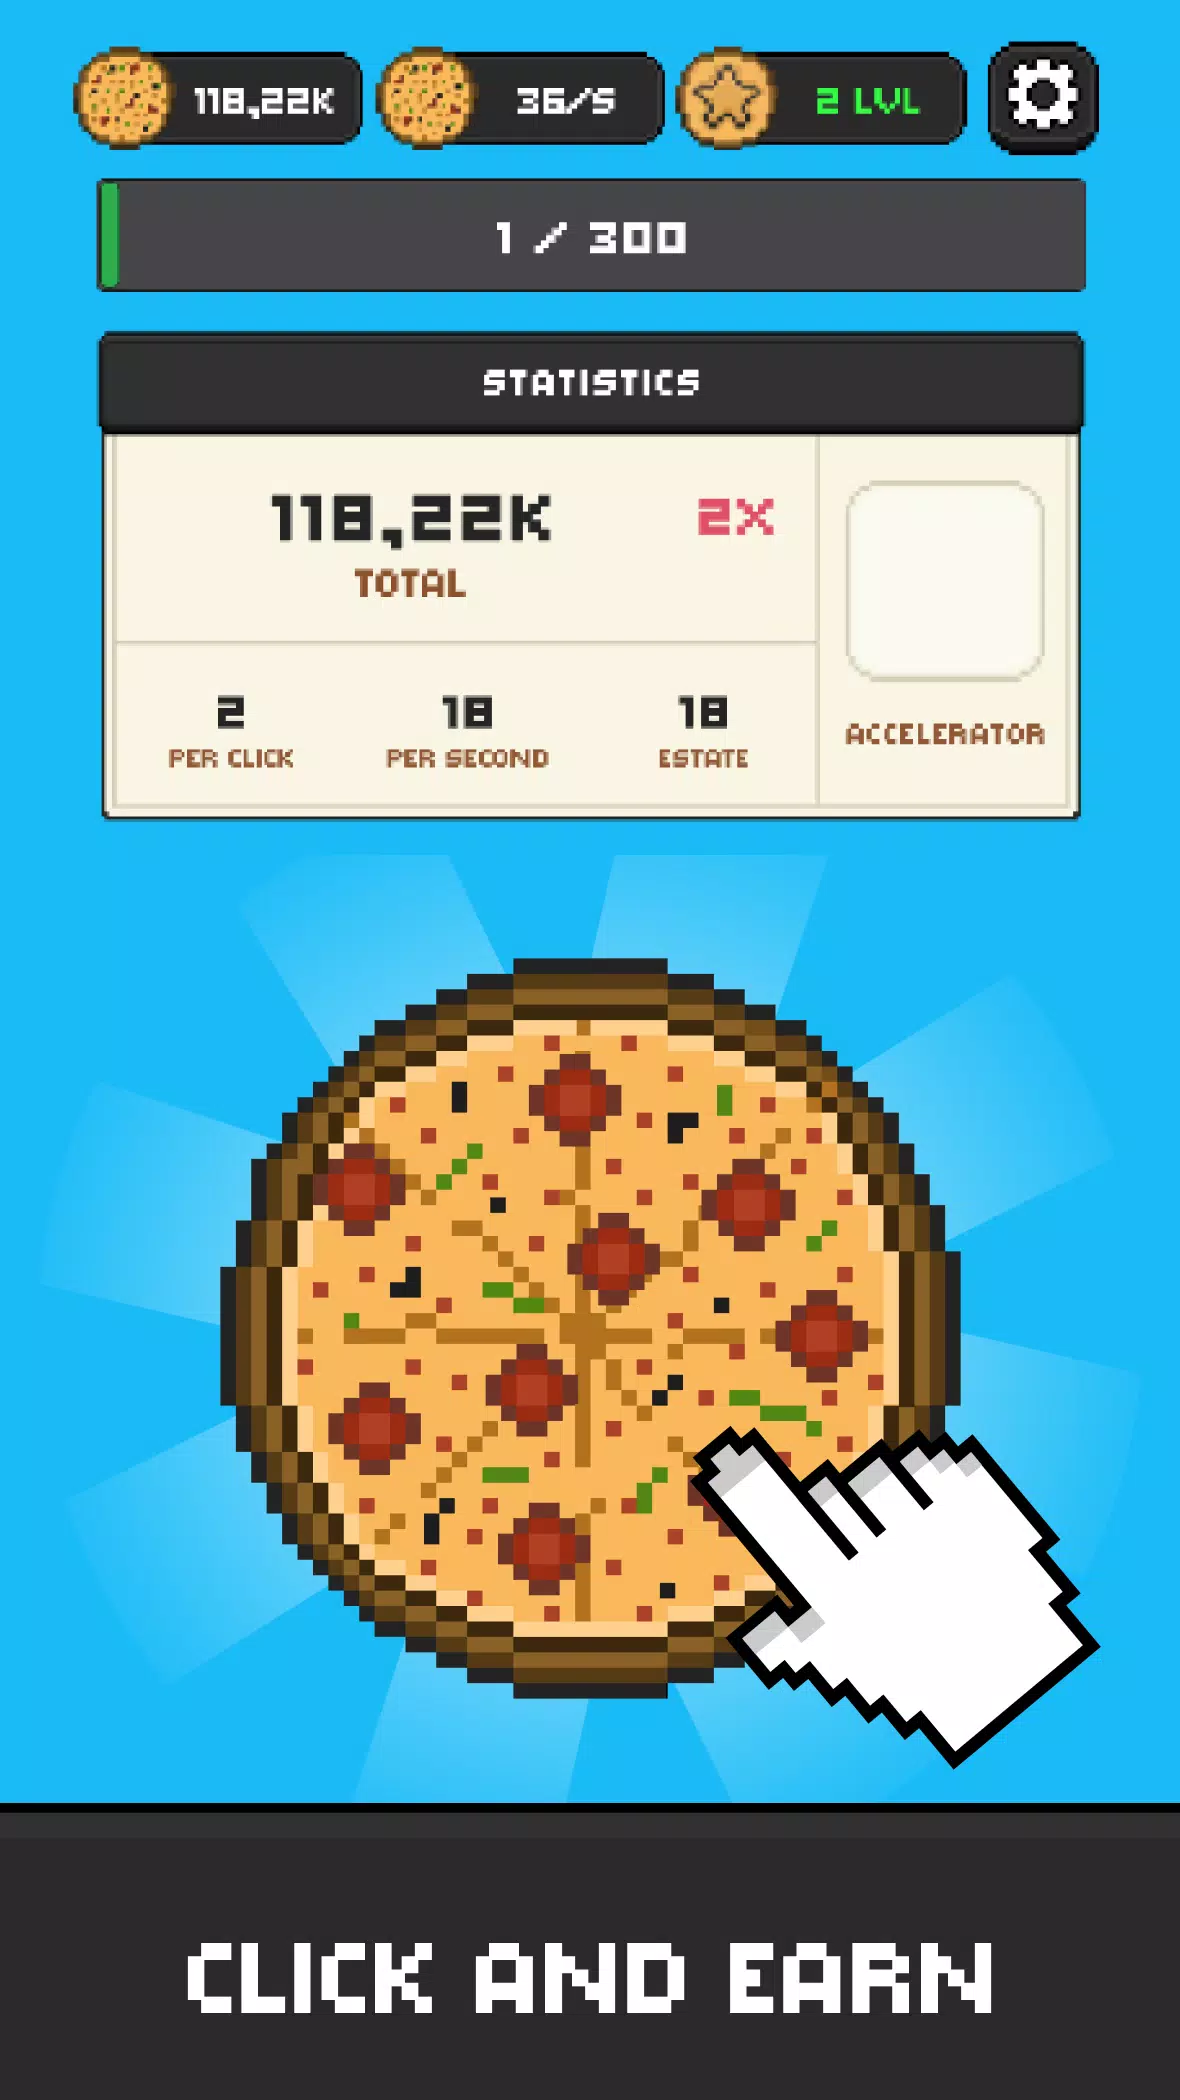 Pizza Clicker – Apps no Google Play